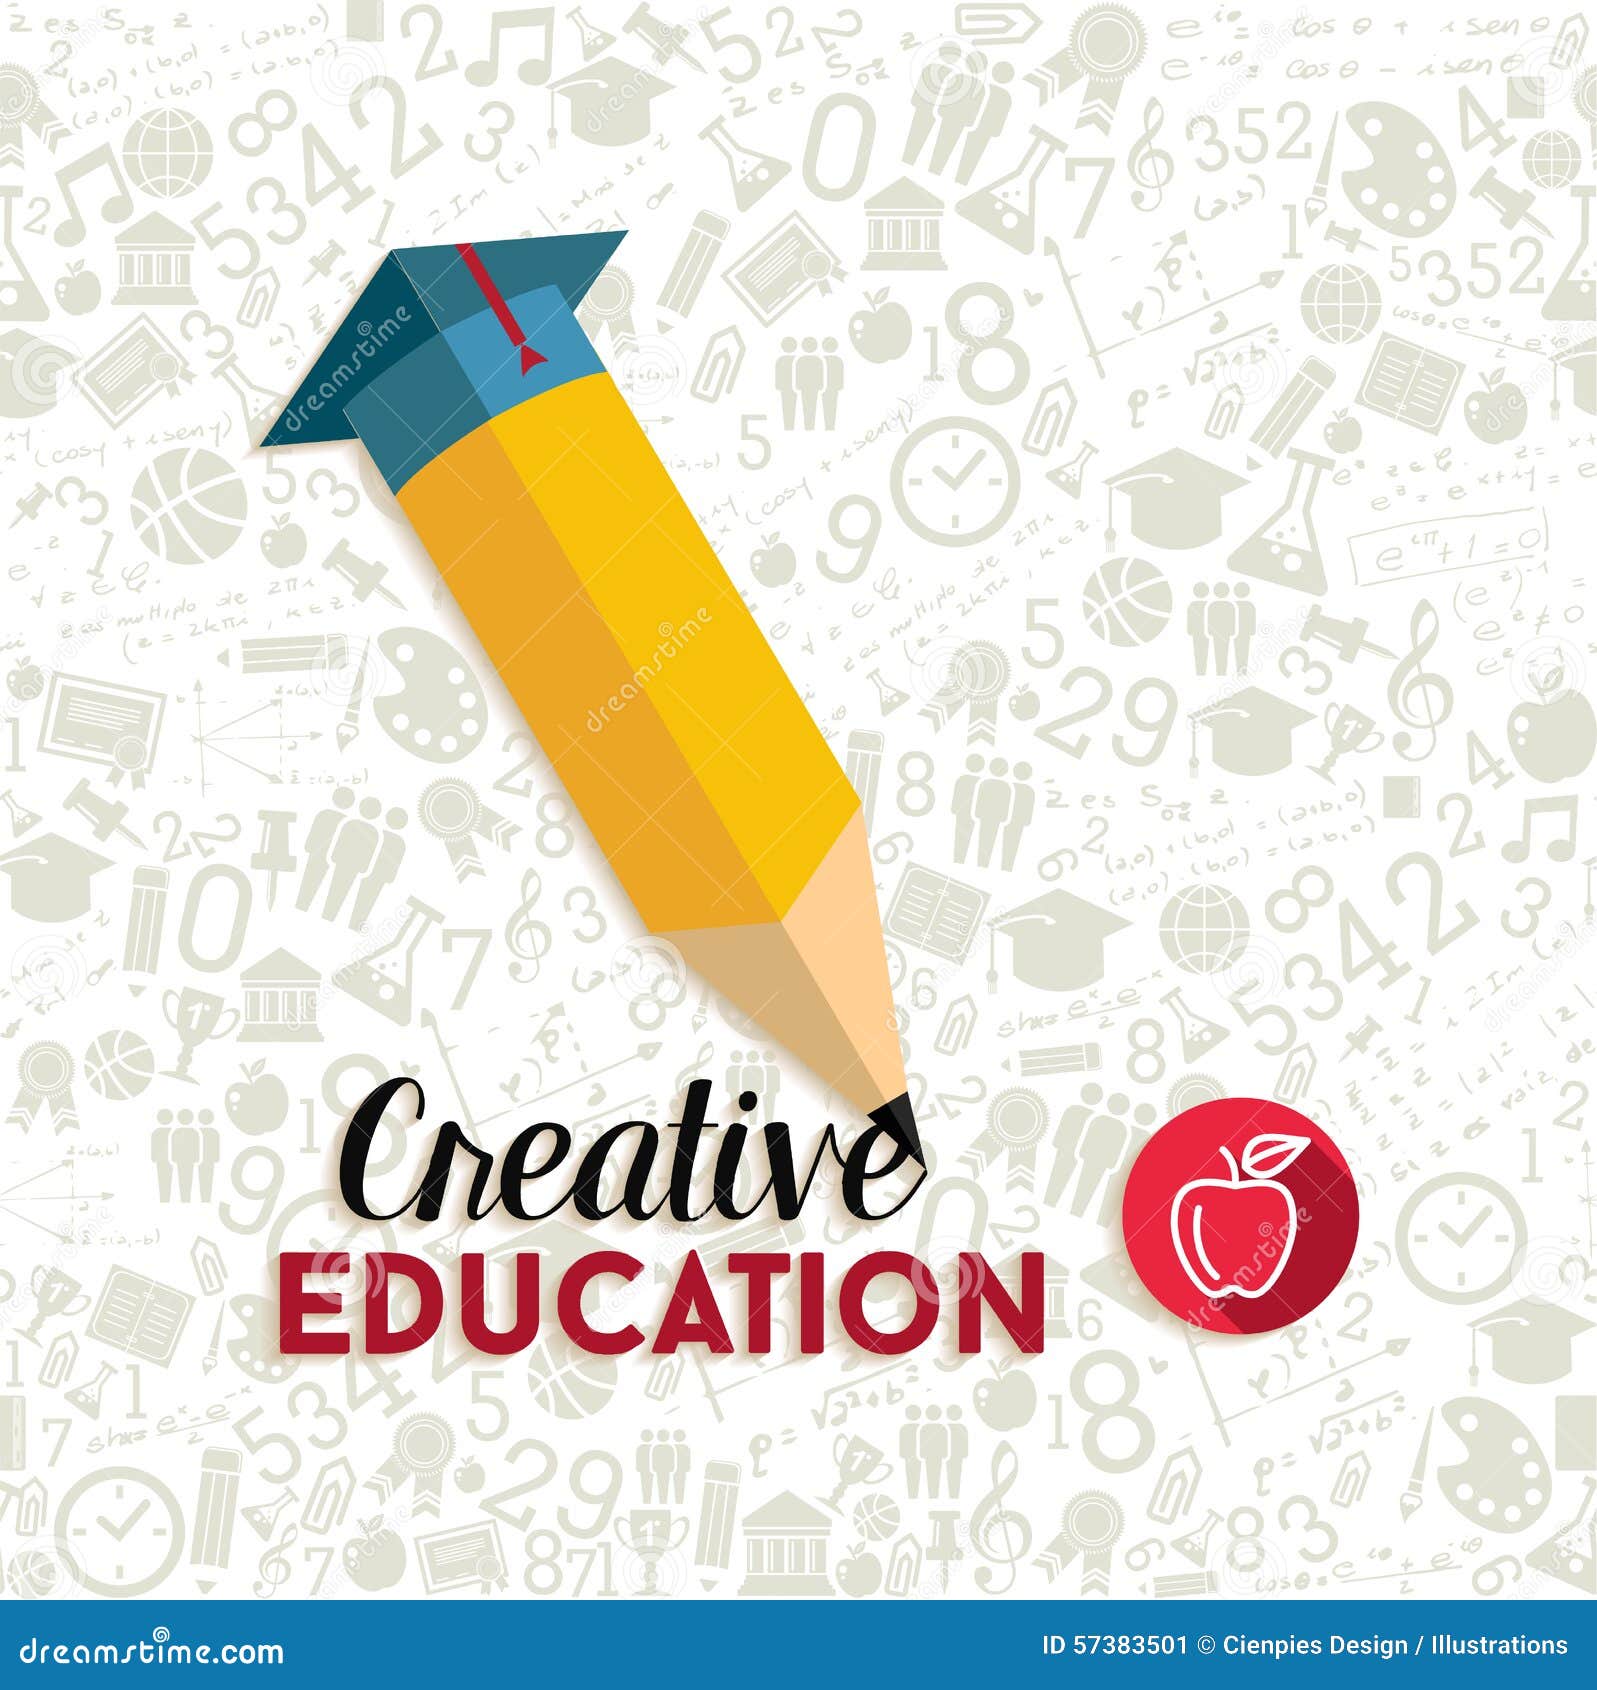 image creative education course fees